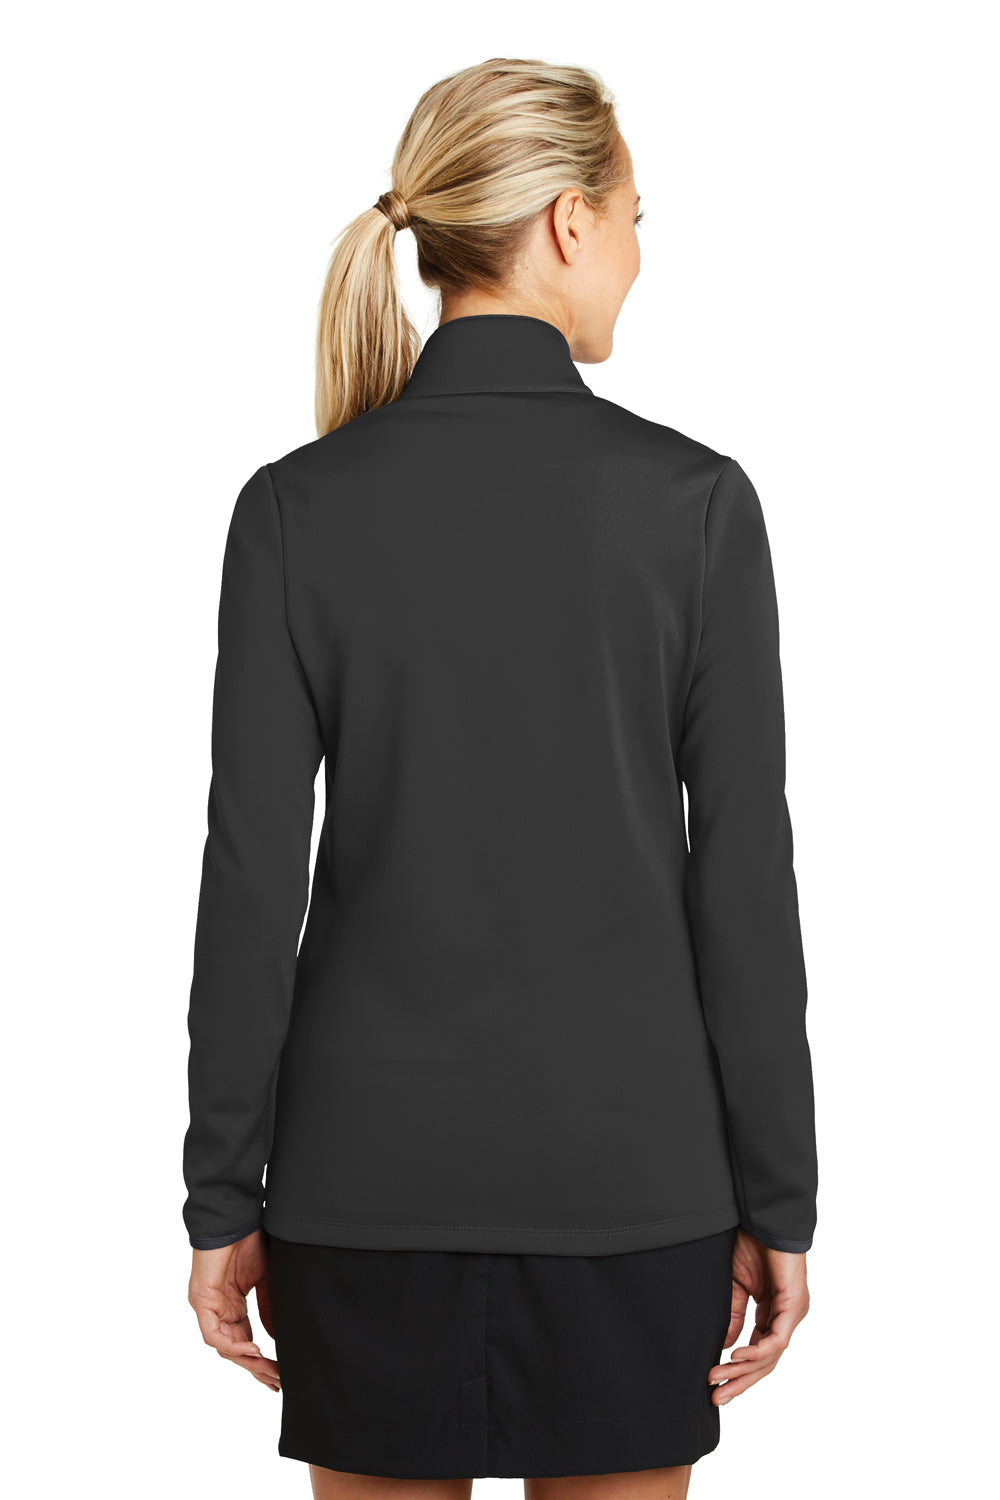 Nike 779804 Womens Hypervis Therma-Fit Moisture Wicking Full Zip Sweatshirt Black/Volt Green Back